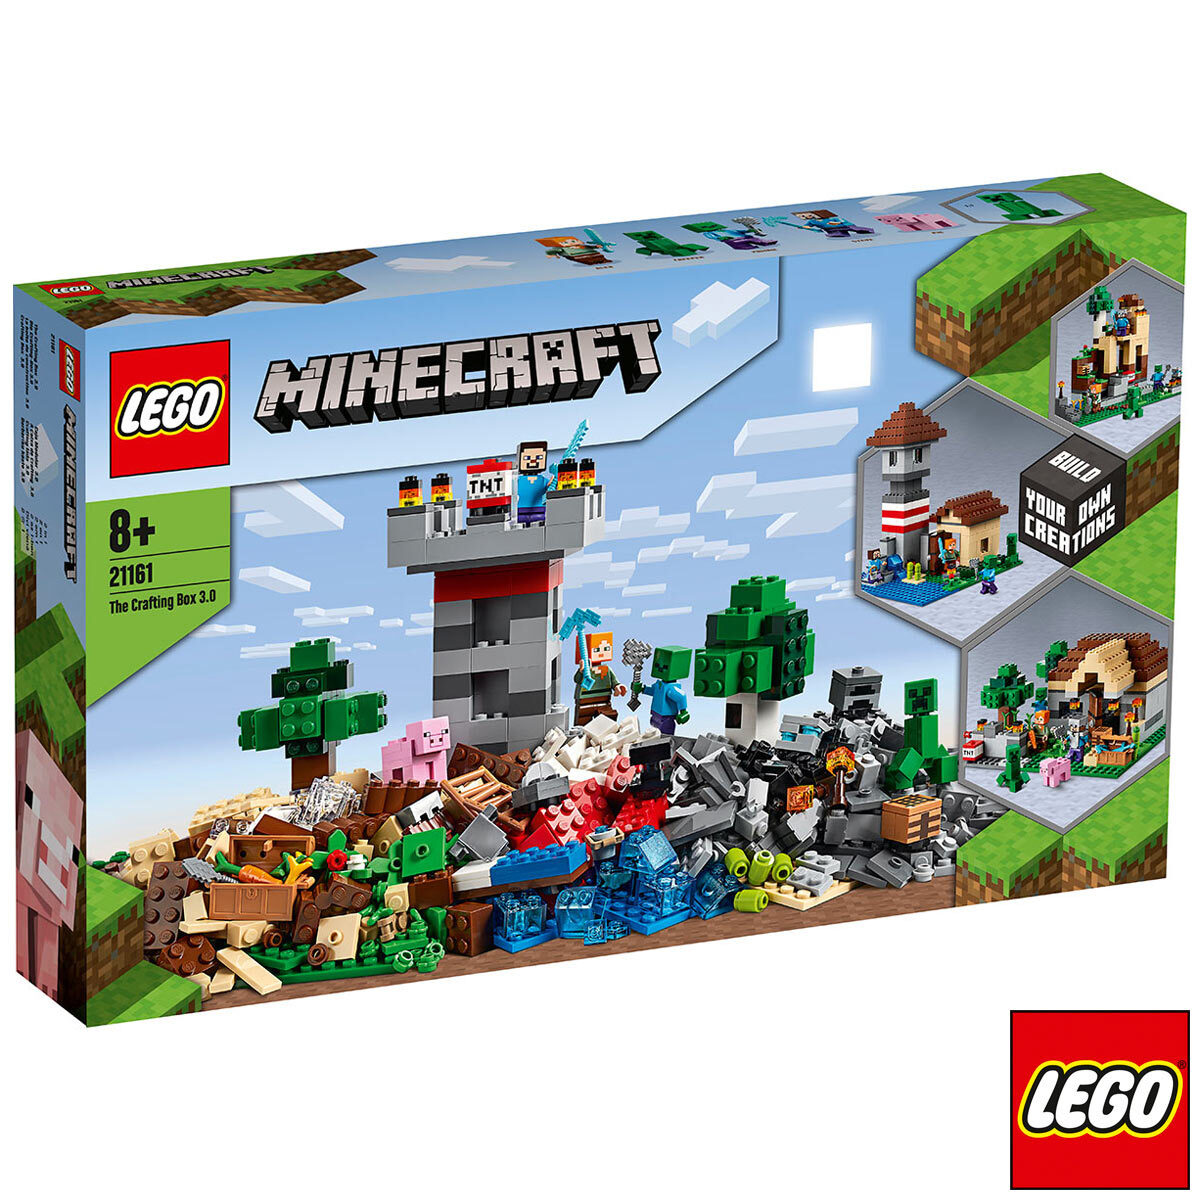 LEGO Minecraft The Crafting Box 3.0 - Model 21161 (8+ Years)